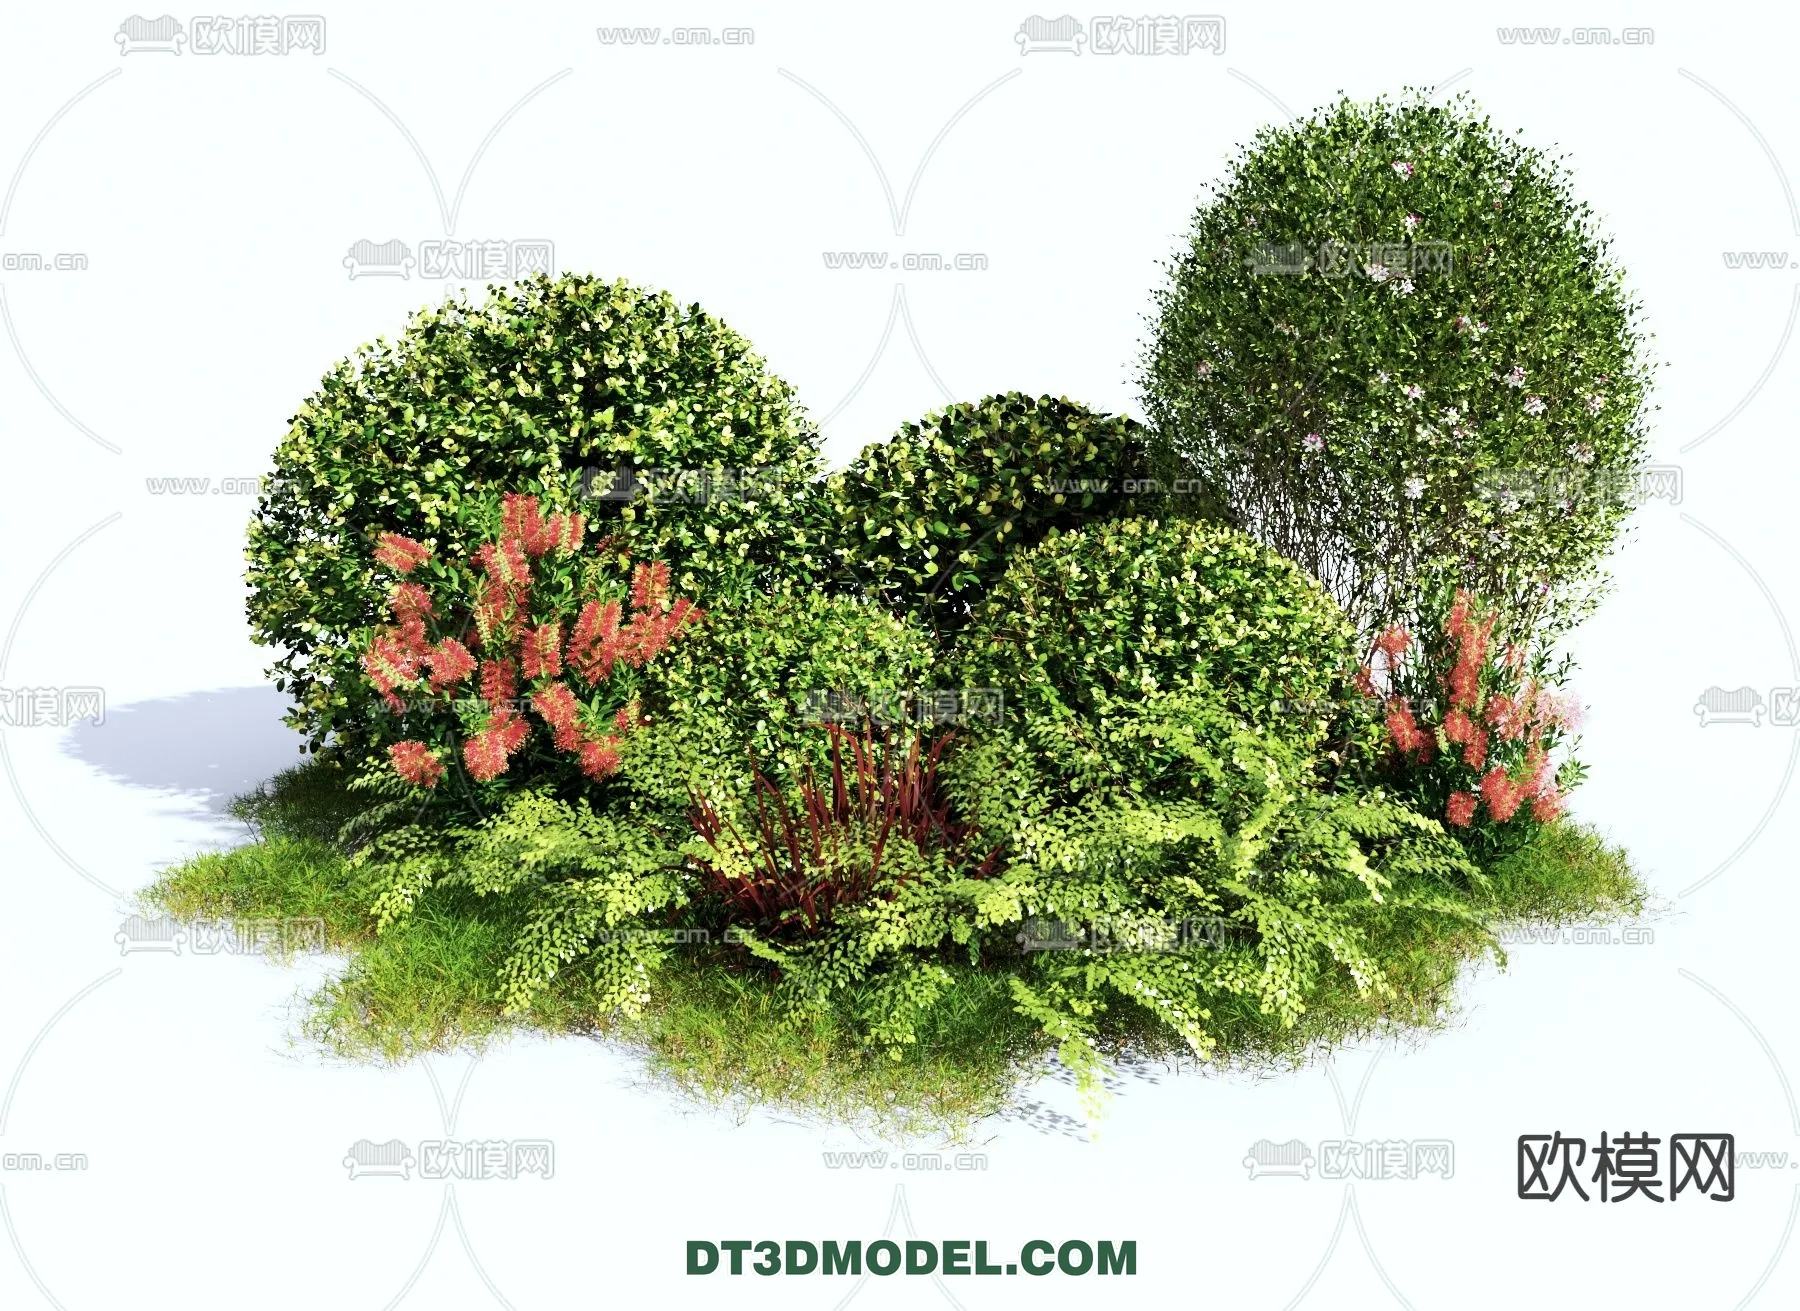 PLANTS – BUSH – VRAY / CORONA – 3D MODEL – 301